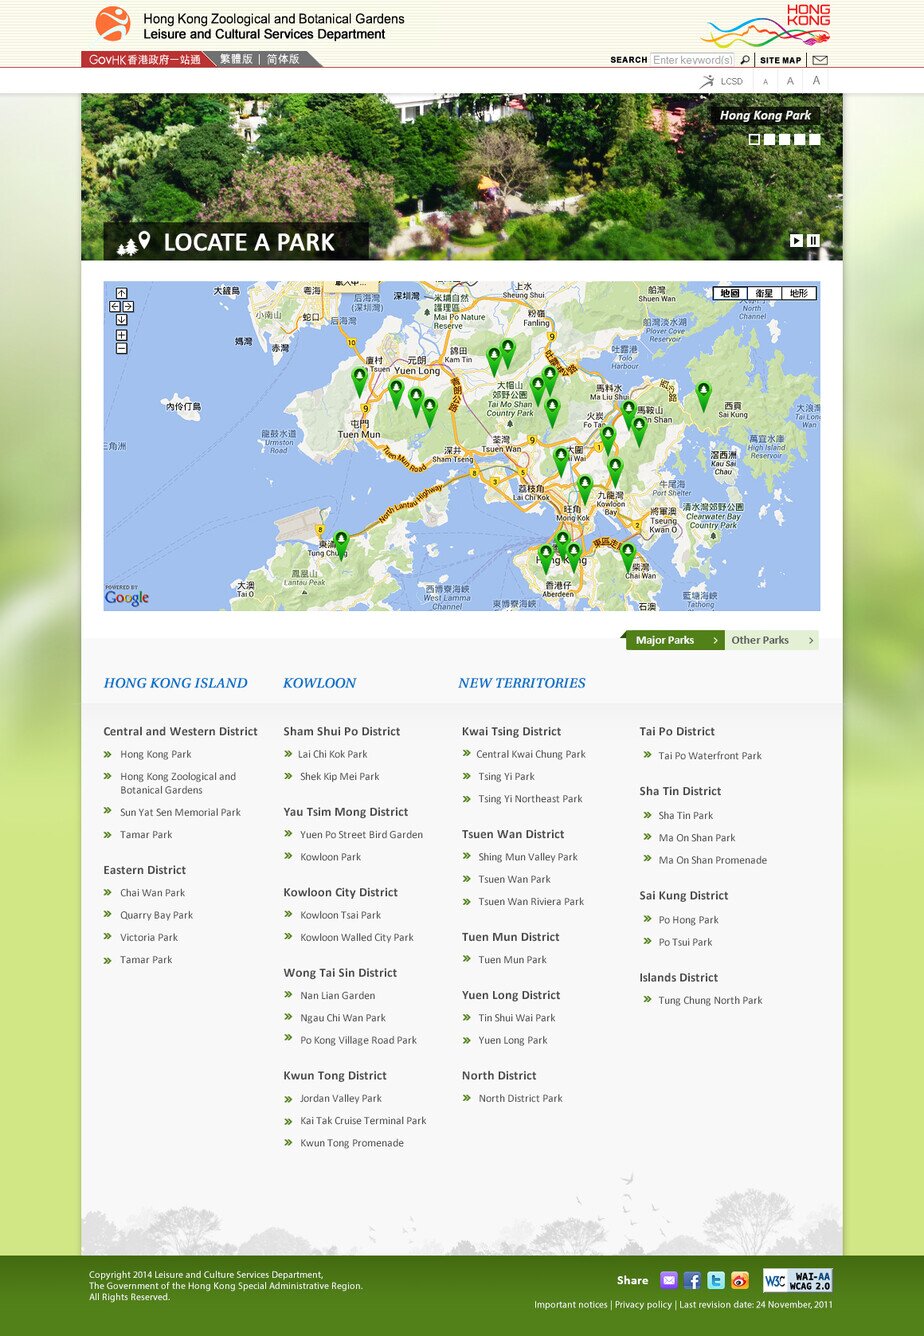 Leisure and Cultural Services Department website screenshot for desktop version 8 of 9